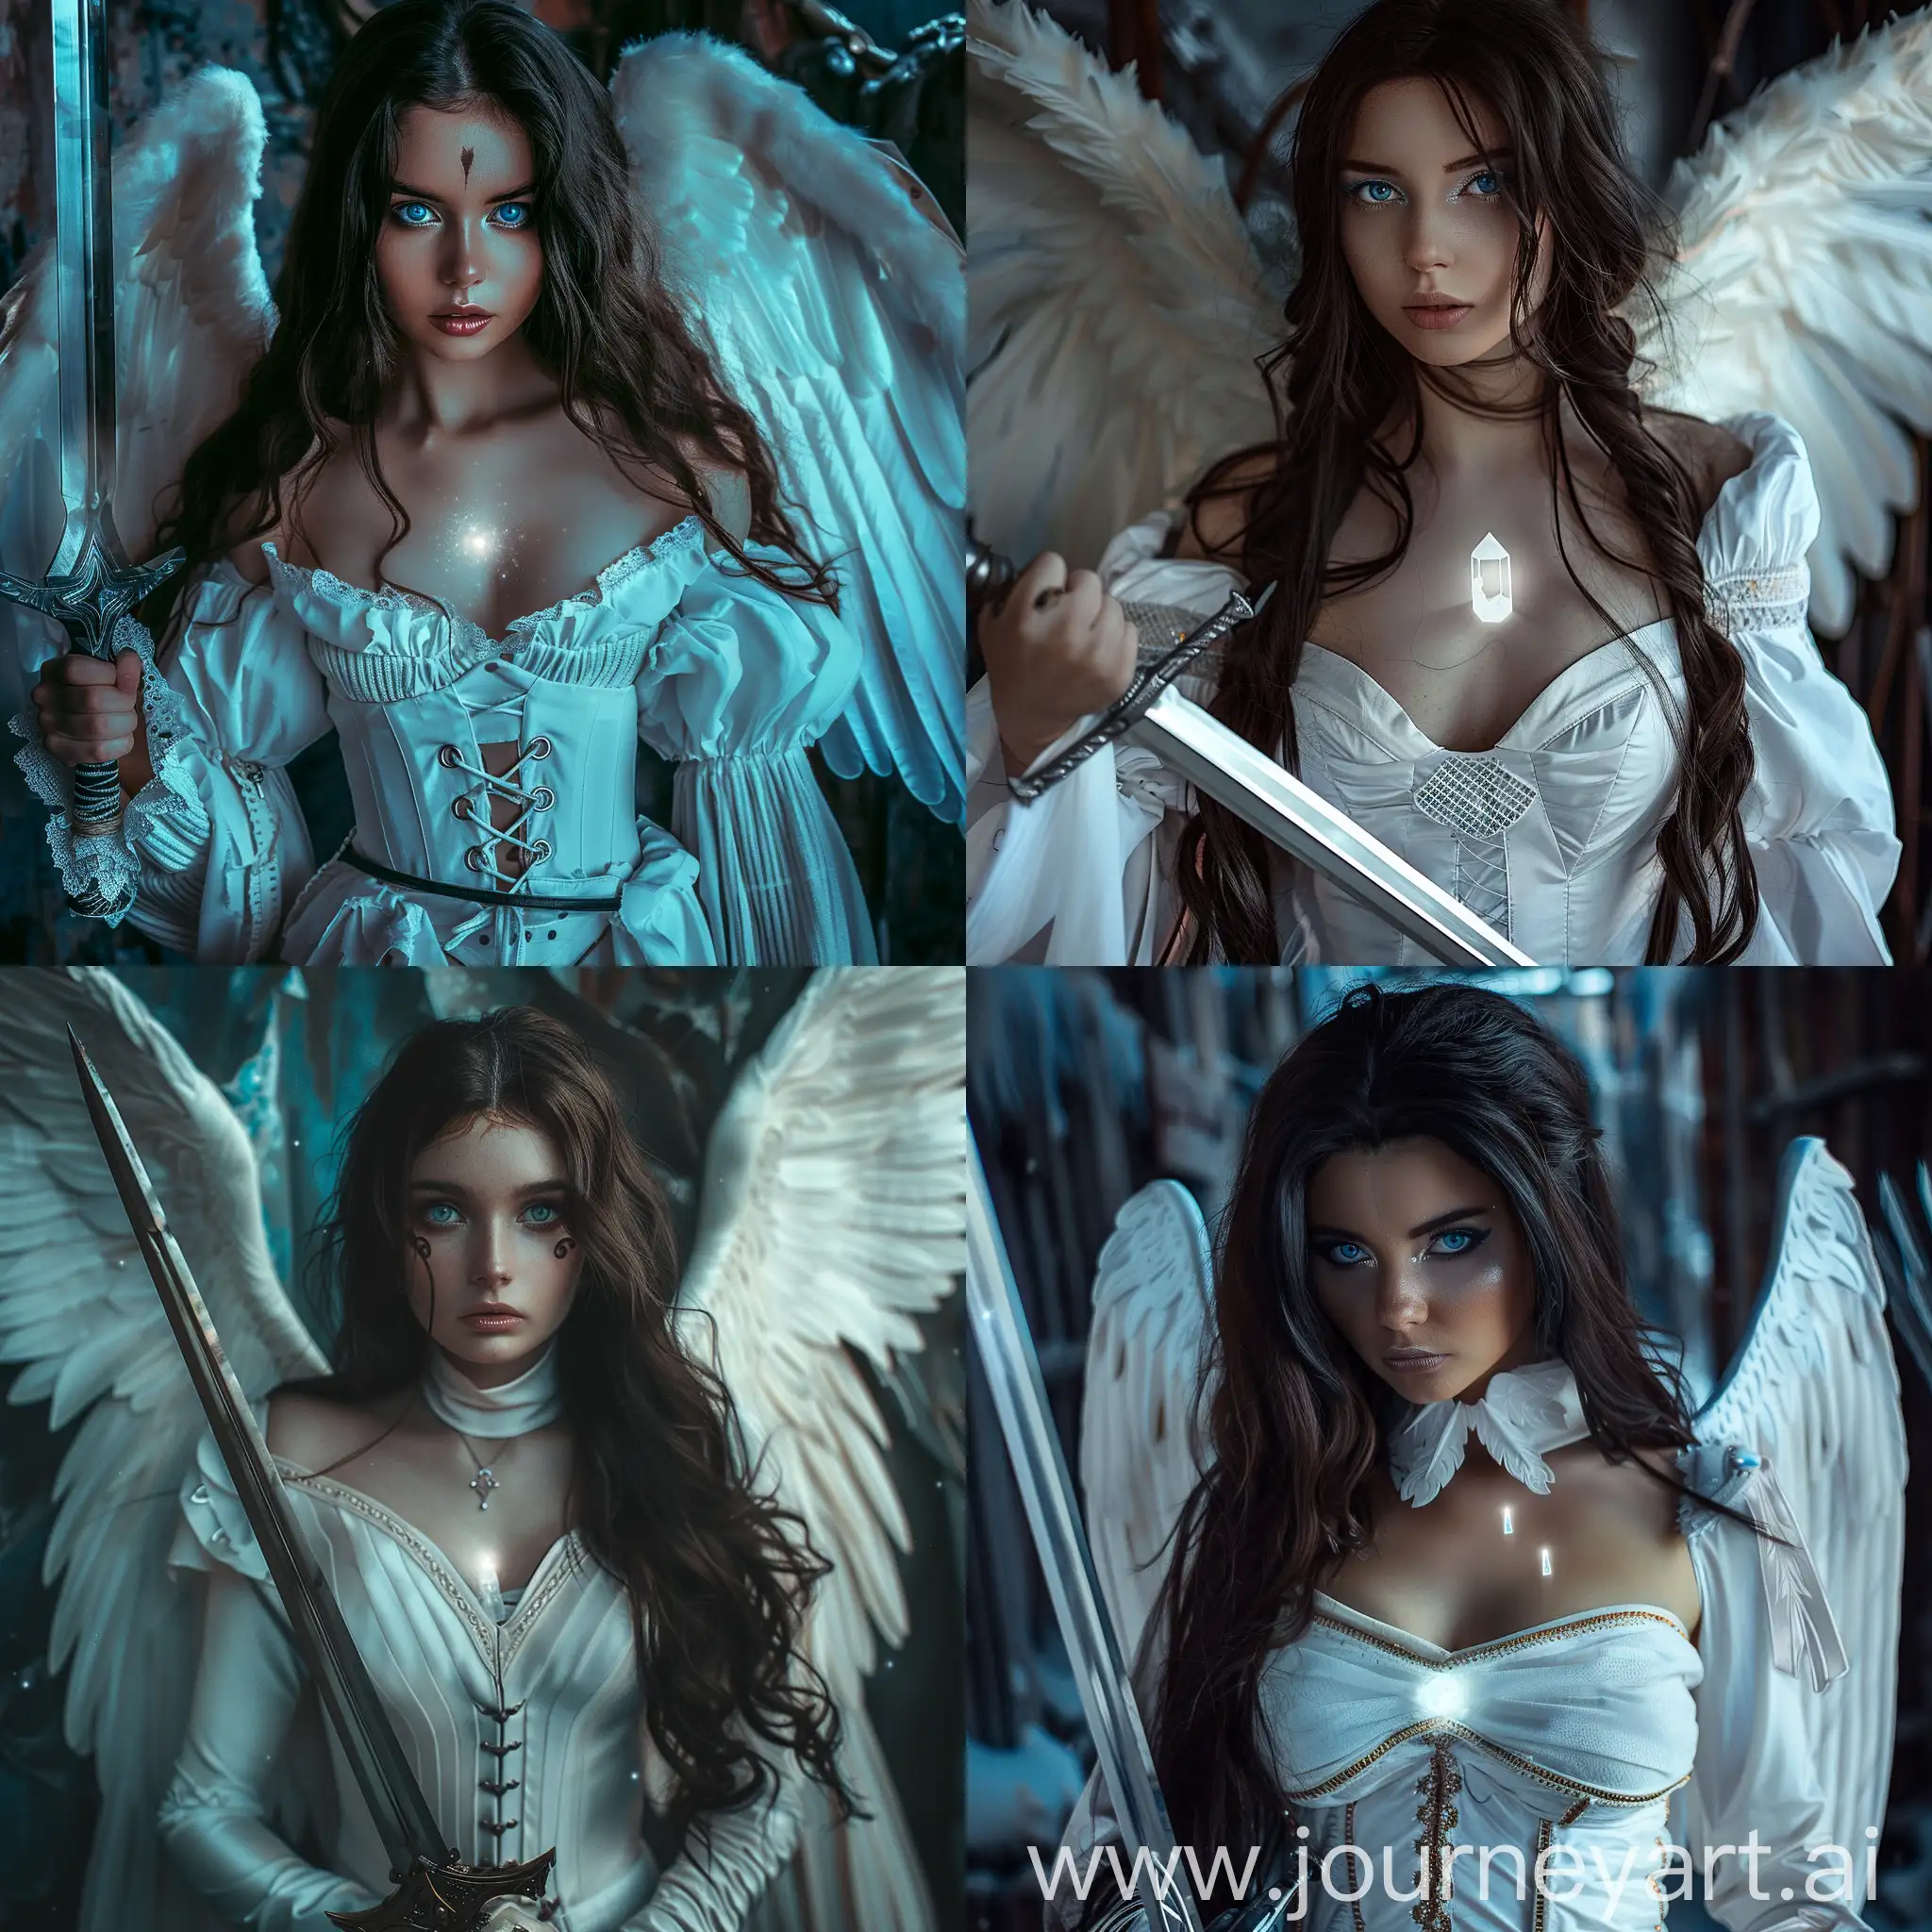 Seductive-Gothic-Angel-Warrior-with-Sword-in-Dark-Fantasy-Setting